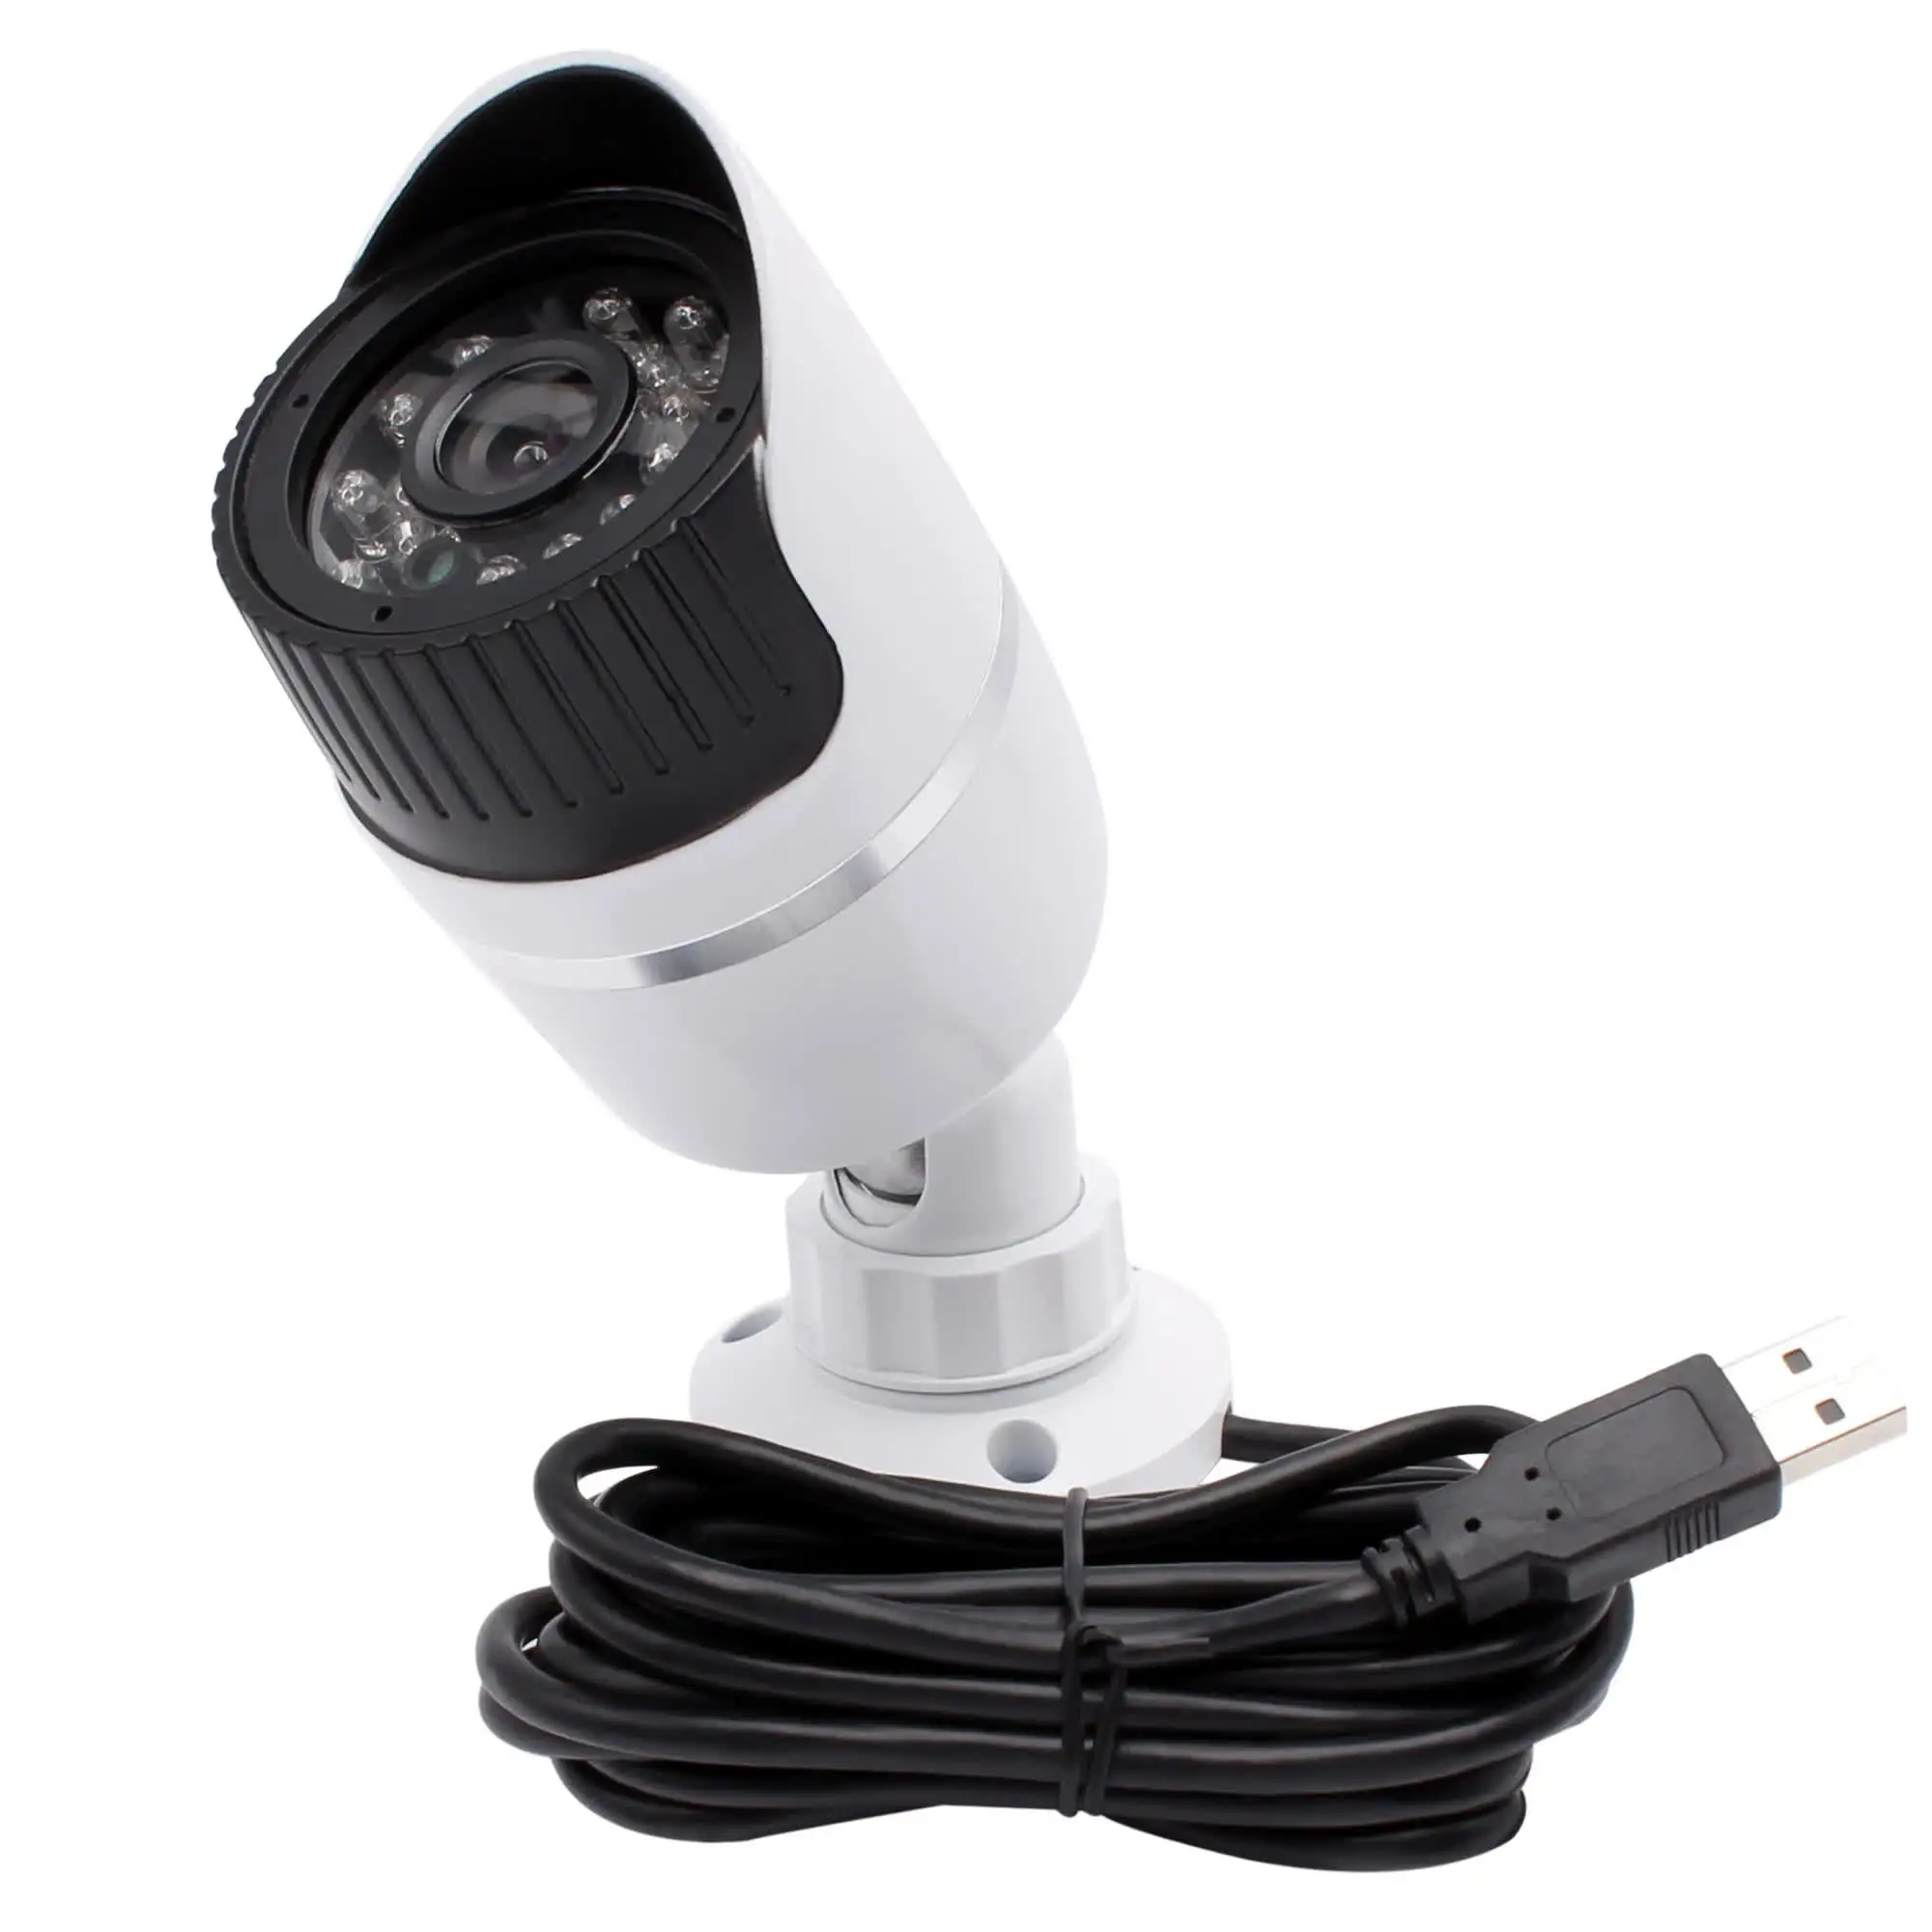 

SVPRO Outdoor USB Video Camera 720P HD 1.0megapixel with 24PCS IR LED Ominivision OV9712 3.6mm Lens mini bullet Outdoor Camera